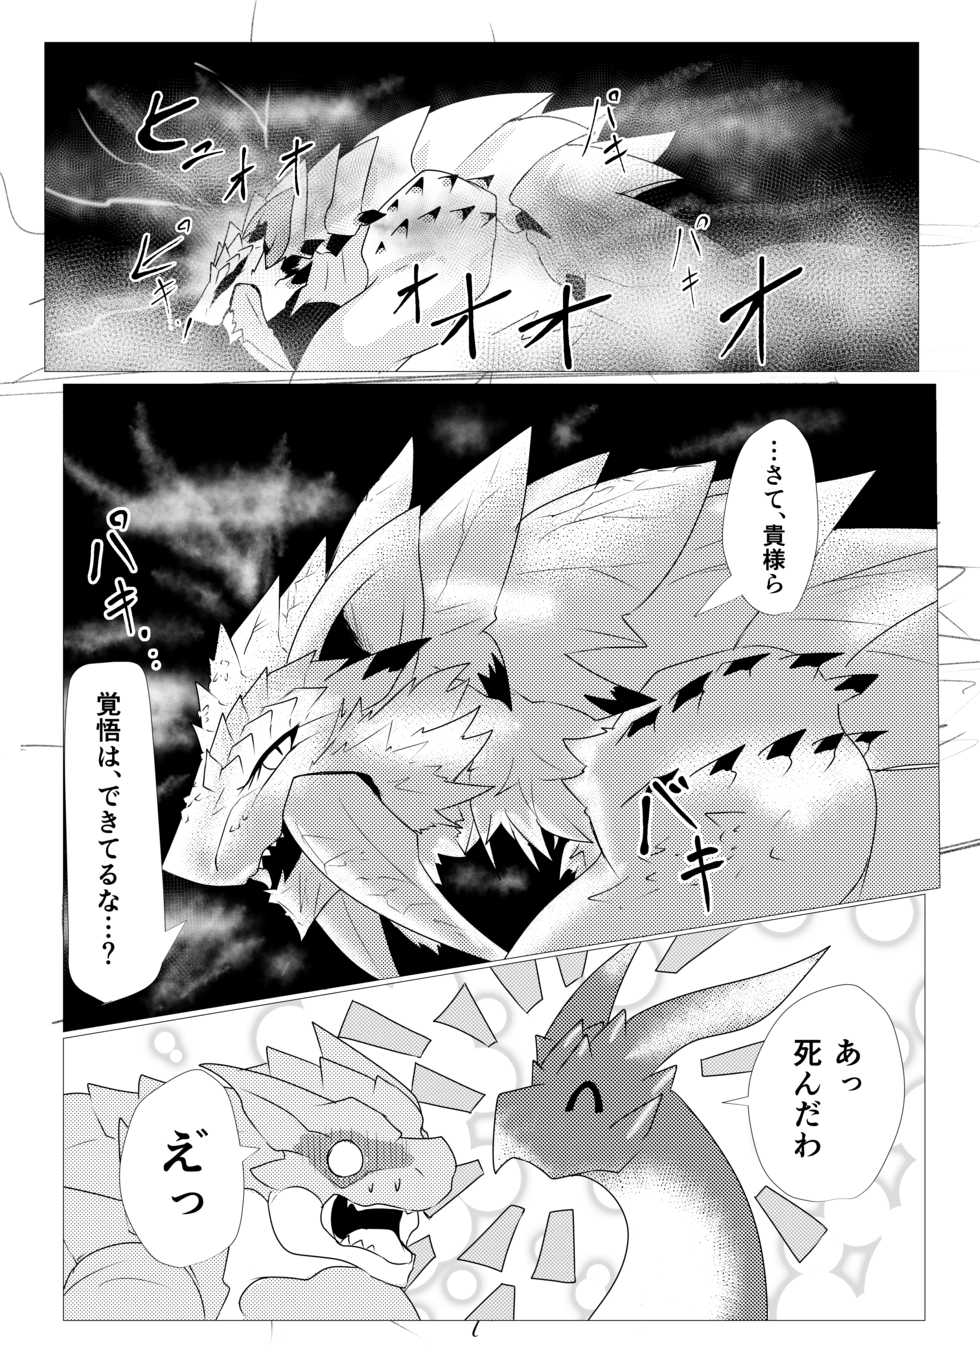 [Feruta] Barioth stuck in wall manga (Monster Hunter) - Page 12